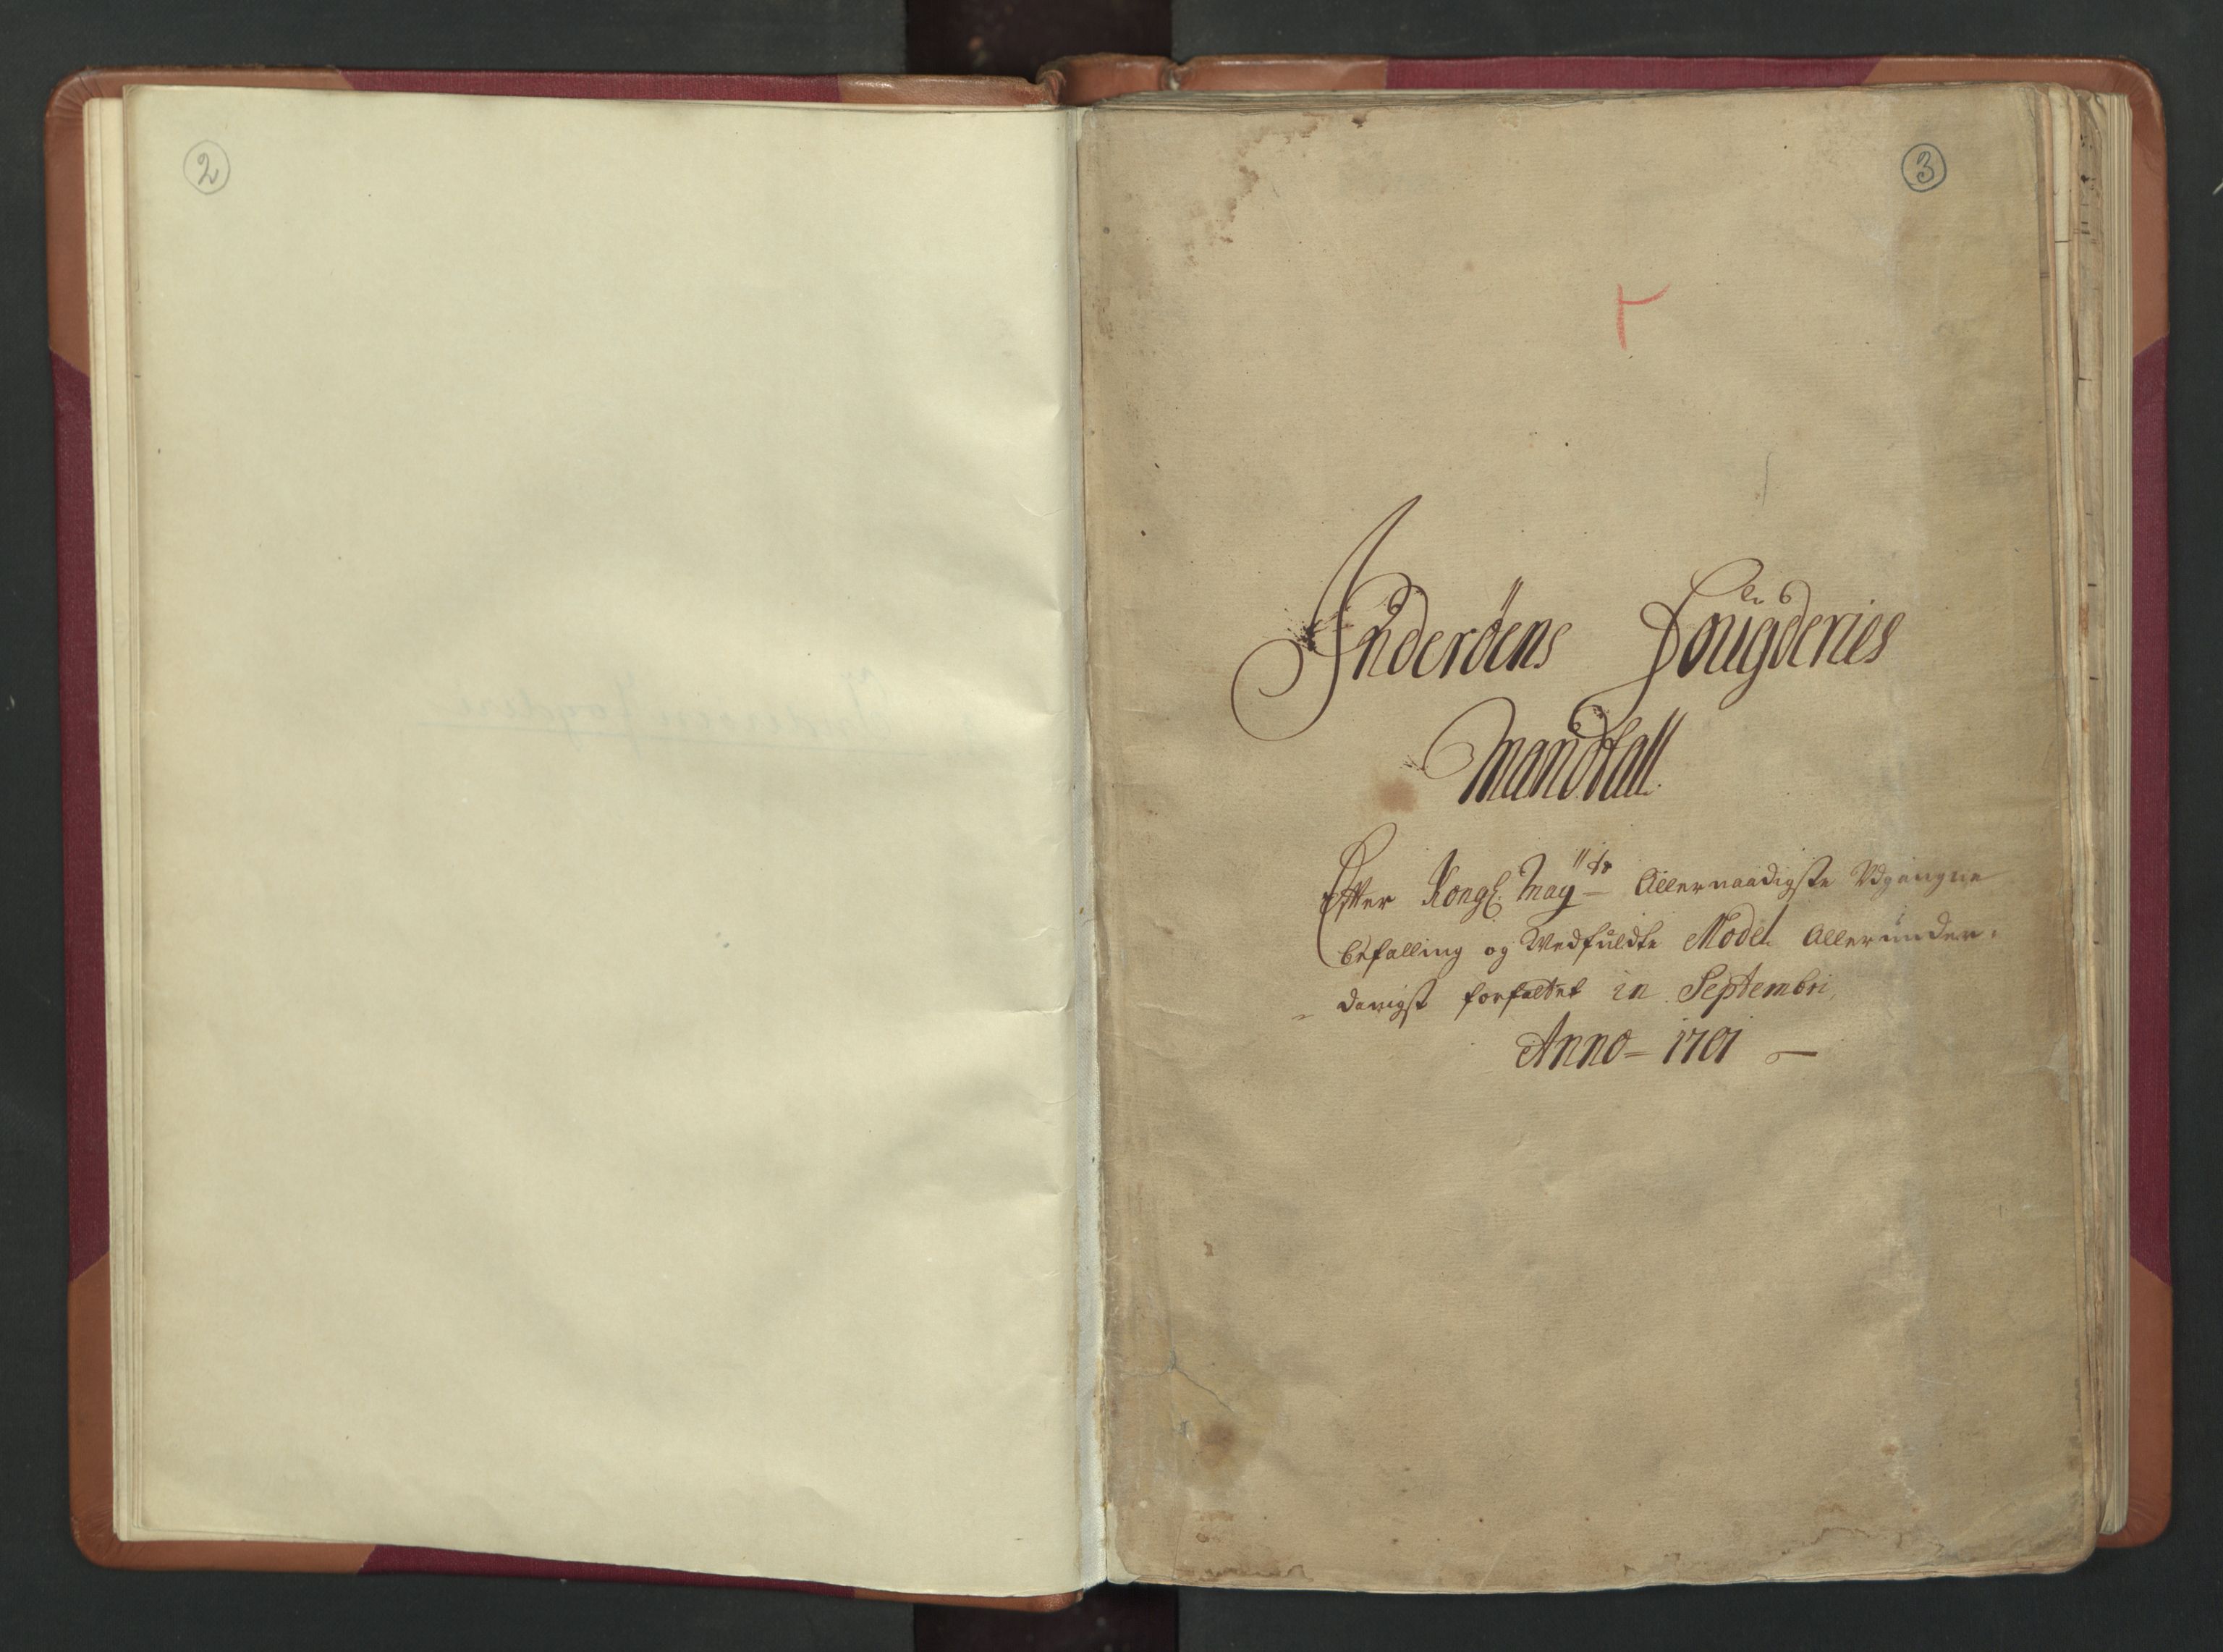 RA, Manntallet 1701, nr. 15: Inderøy fogderi og Namdal fogderi, 1701, s. 2-3